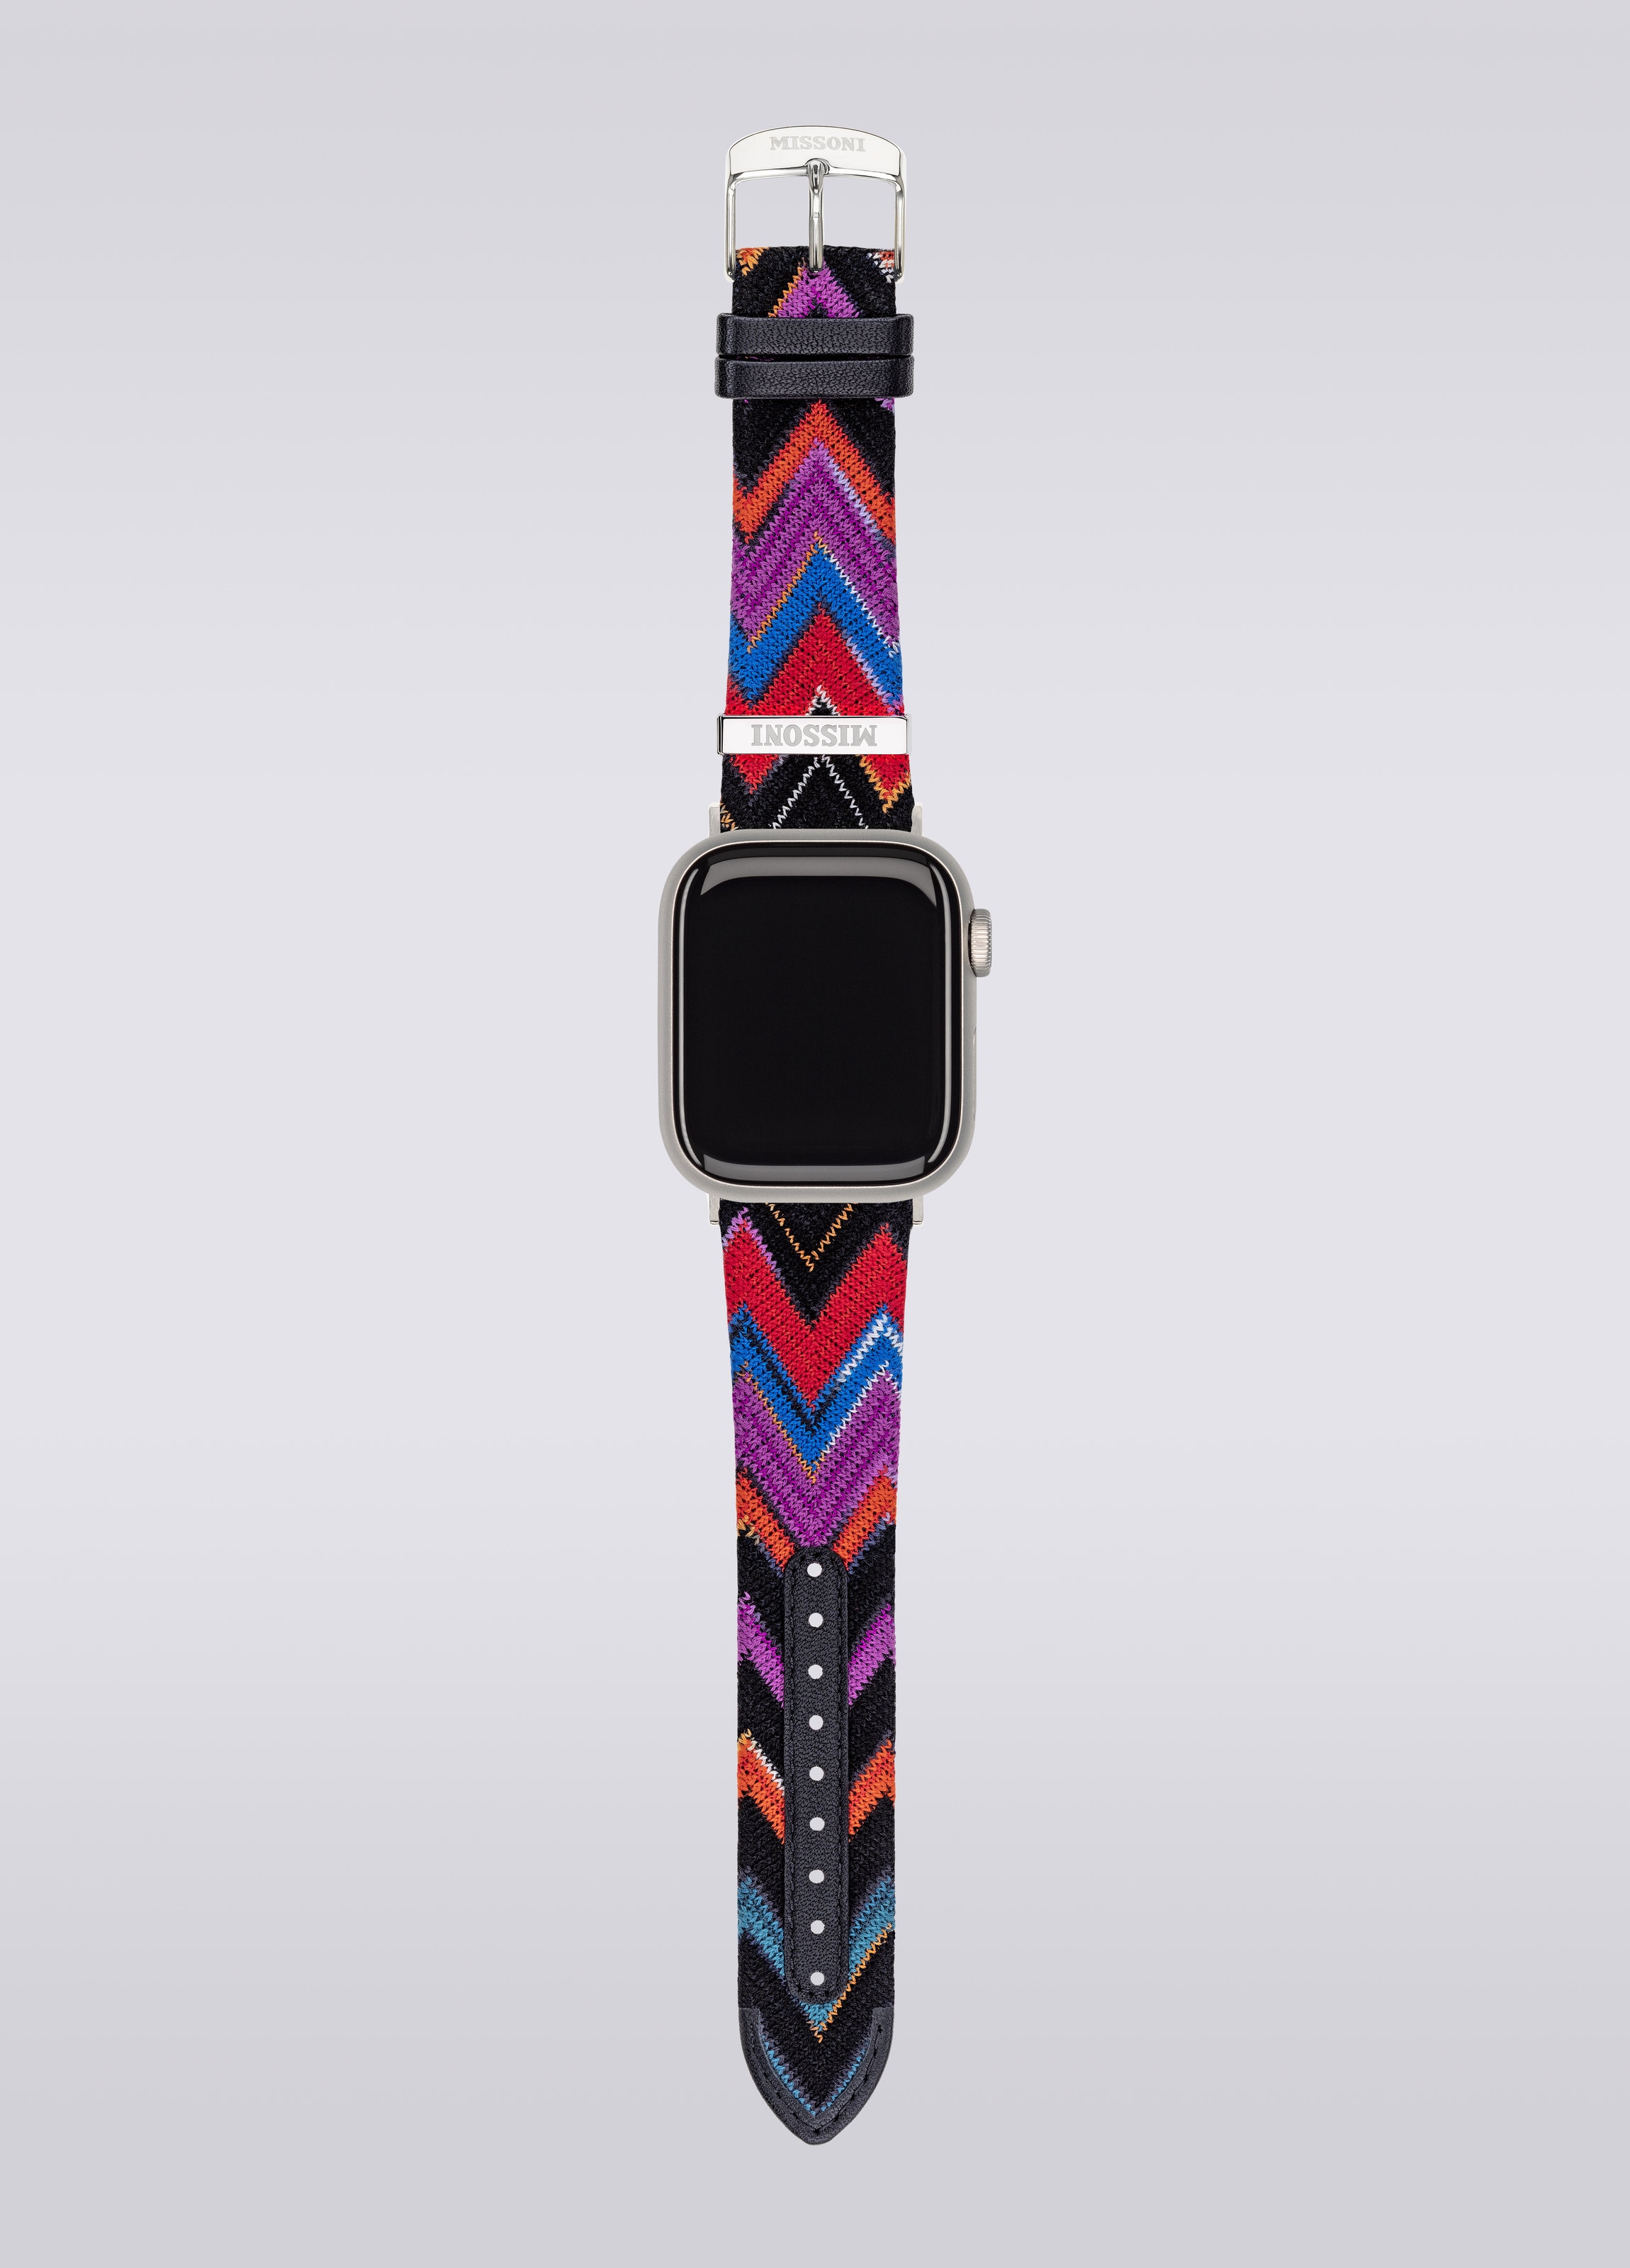 Missoni Fabric 22 mm Apple watch compatible strap, Multicoloured  - 4